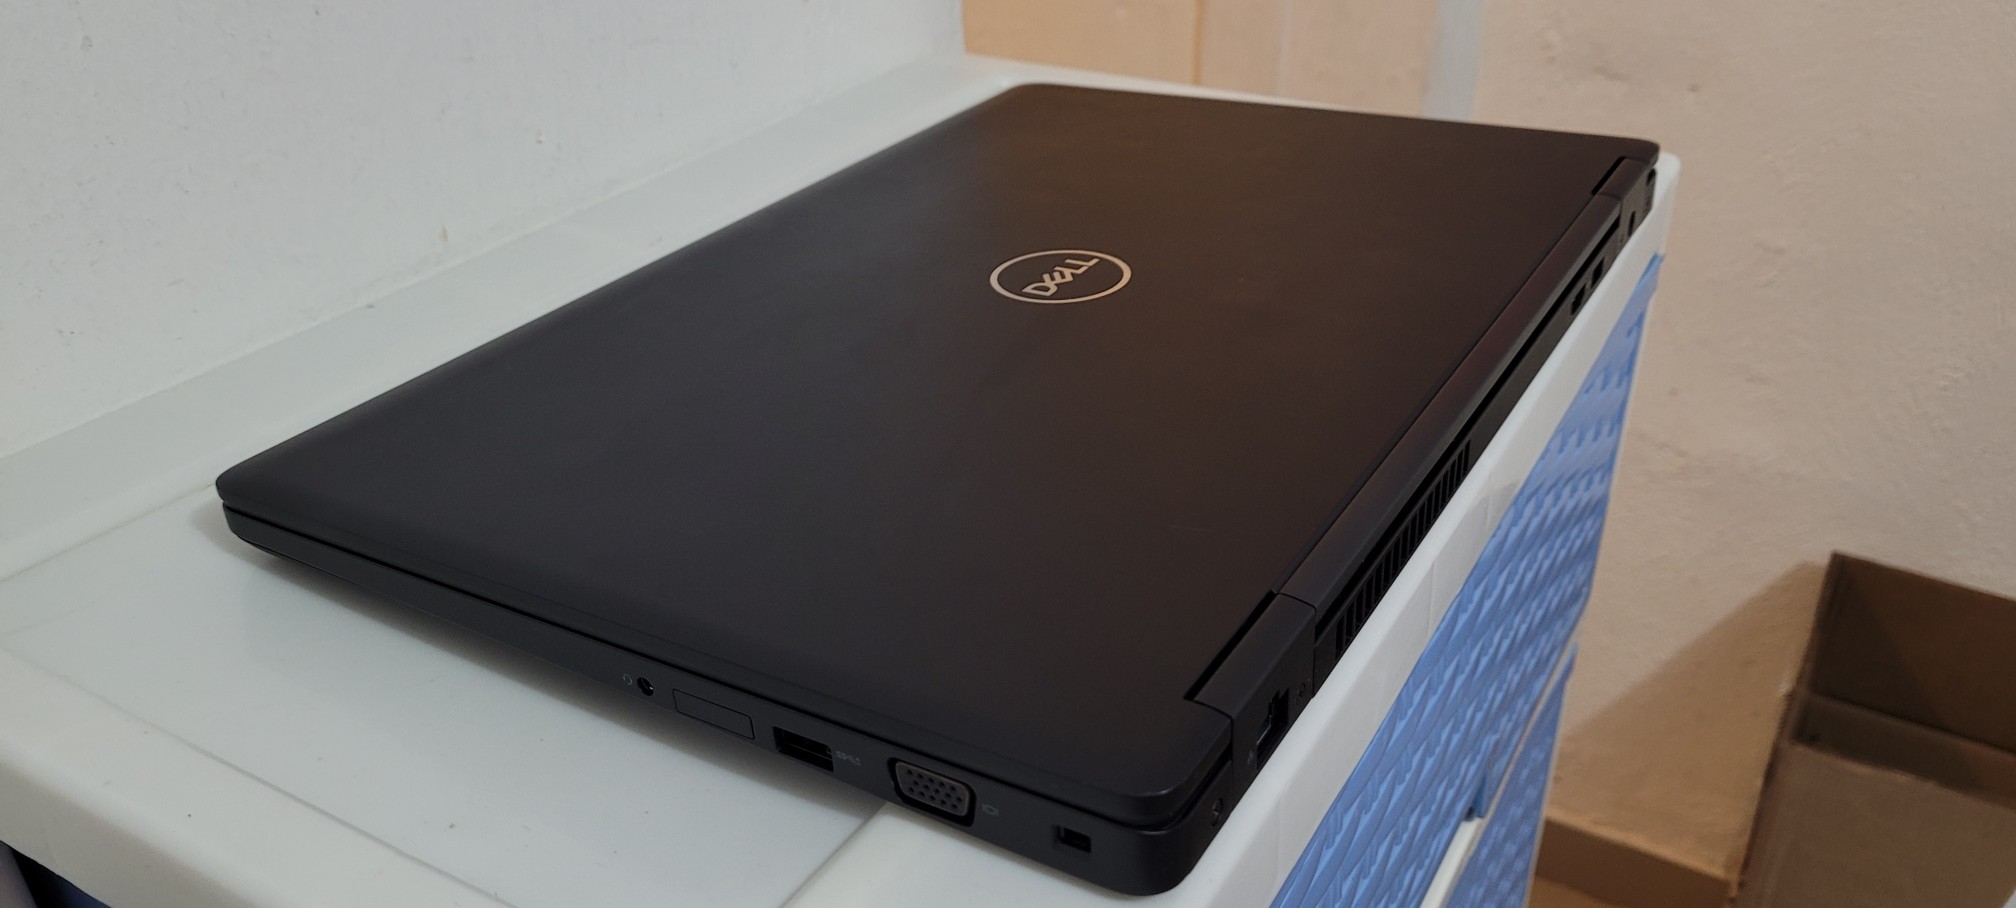 computadoras y laptops - Dell Slim 14 Pulg Core i7 6ta Gen Ram 8gb ddr4 Disco 256gb SSD FULL 1080p 2